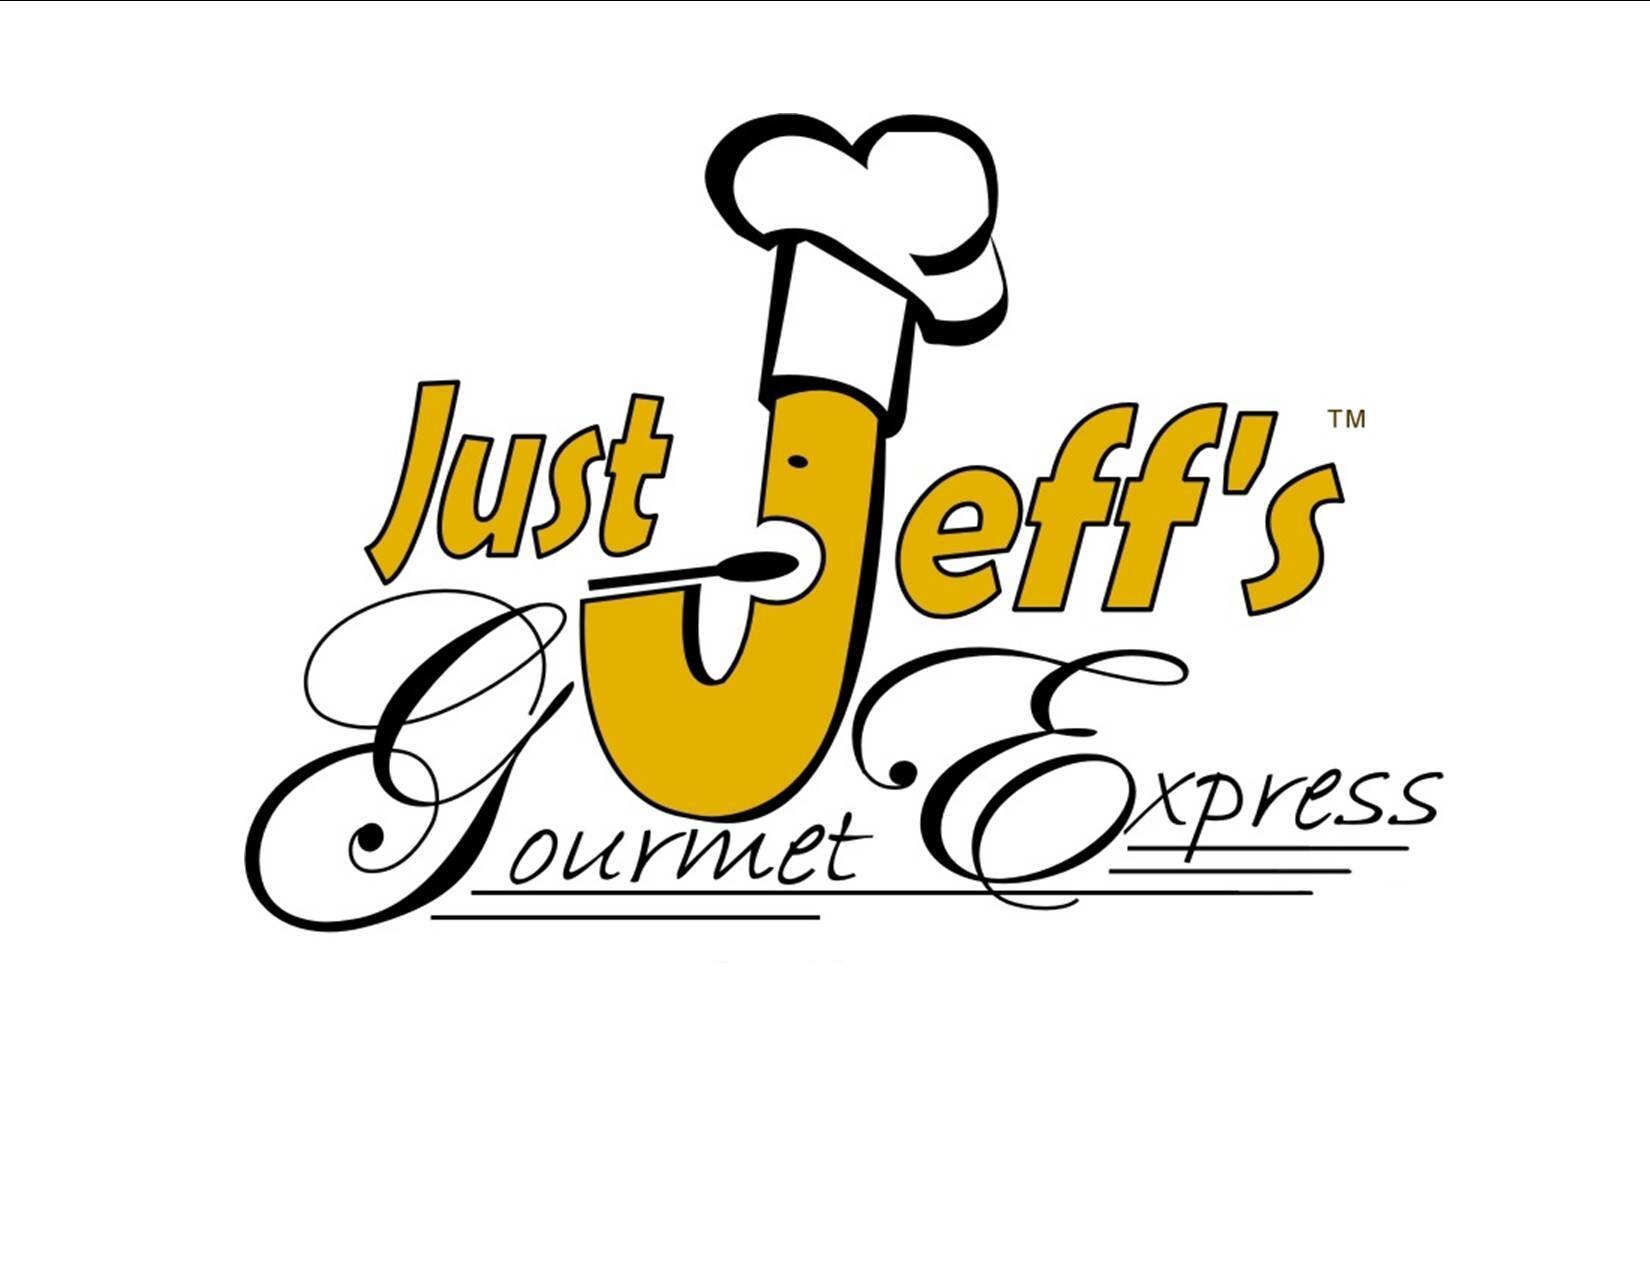 Just Jeff's